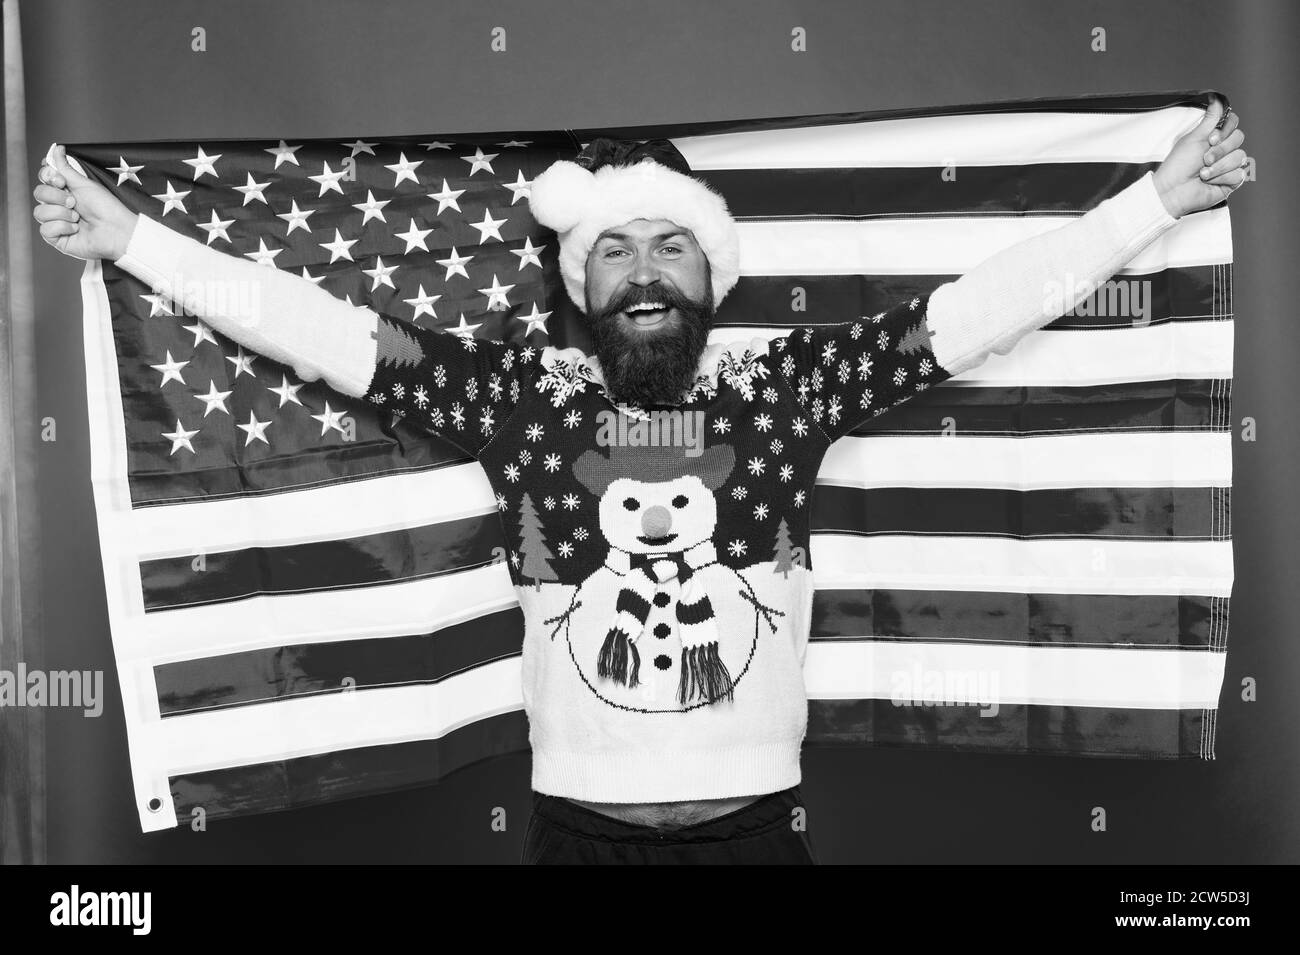 Merry american xmas. Happy Santa hold american flag. Bearded man celebrate xmas. Holiday decoration and decor. All american xmas party. Happy new year. Its xmas time. Stock Photo